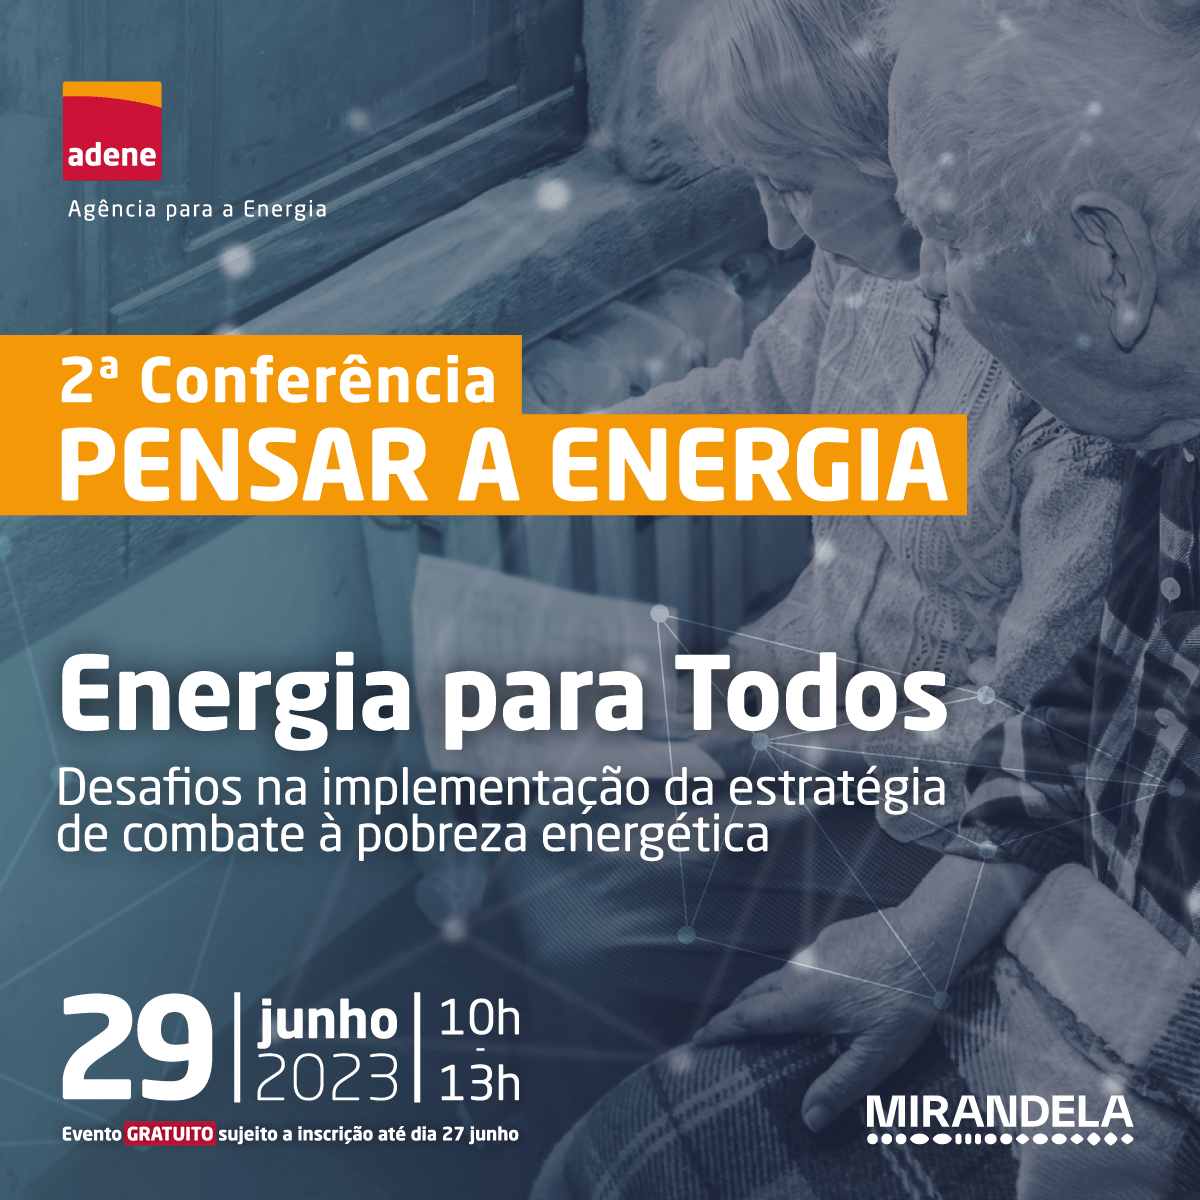 ADENE promove segunda conferência “Pensar a Energia” sobre Pobreza Energética